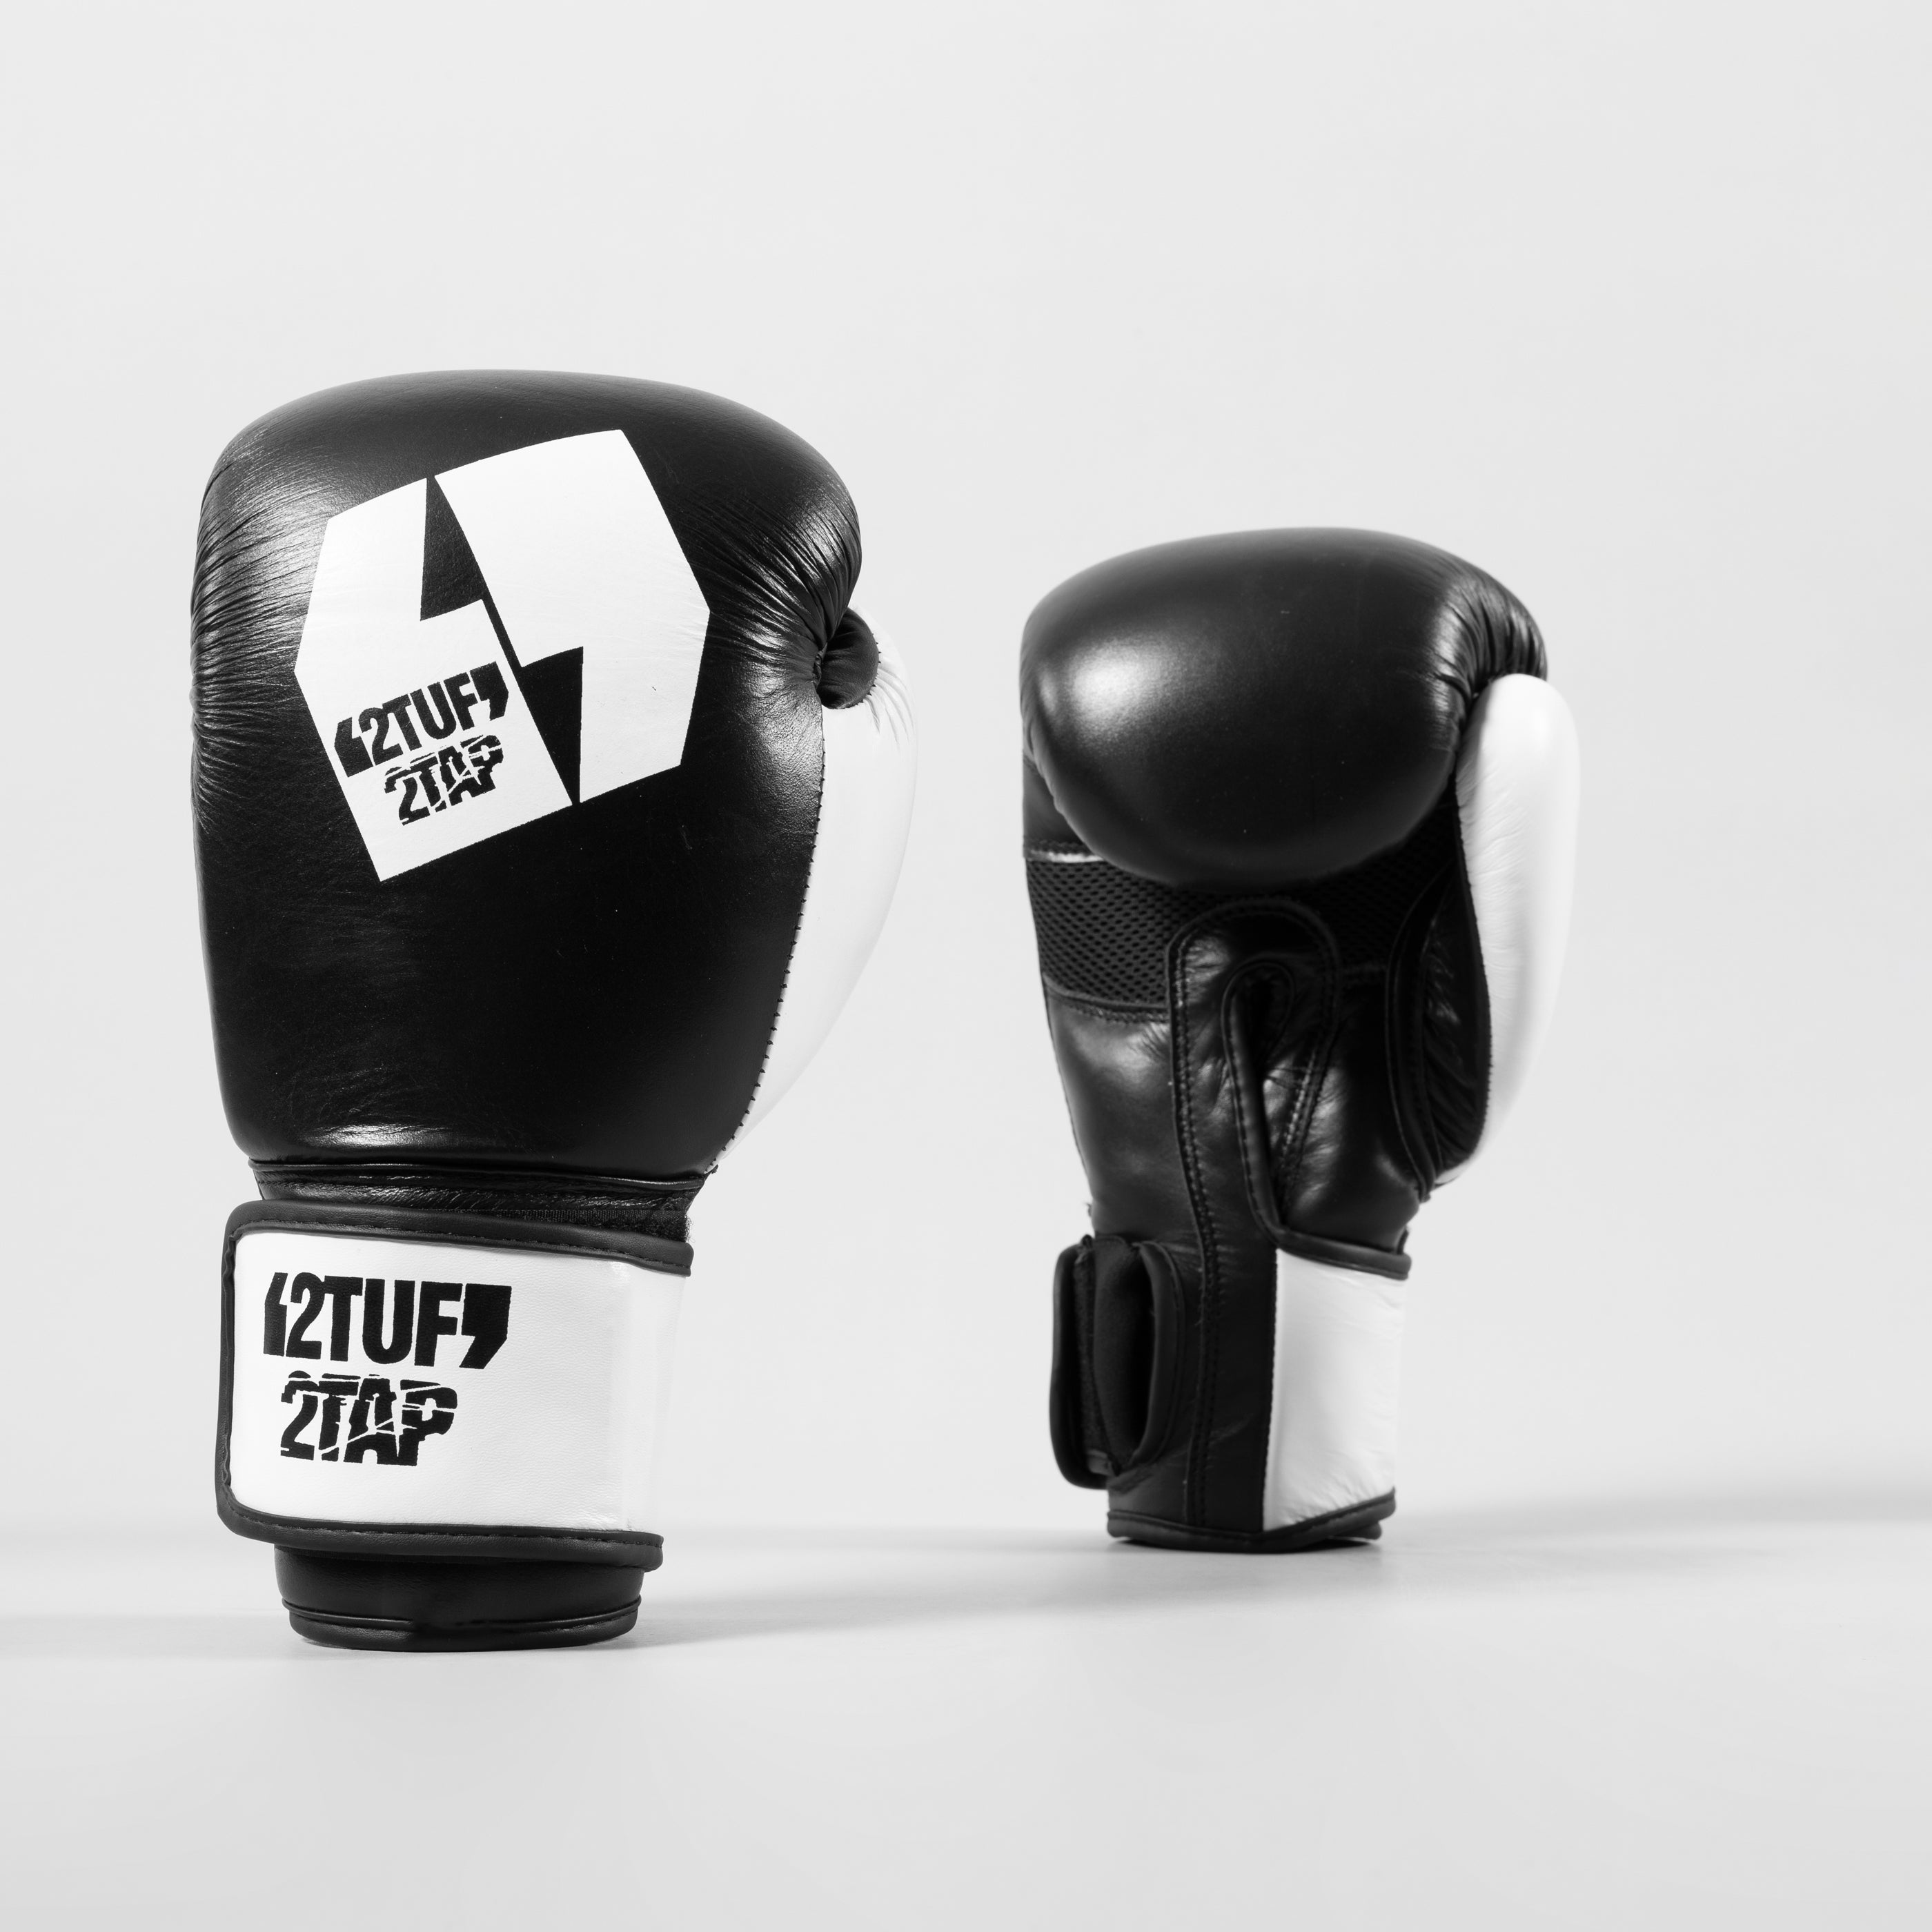 'Viktor' Professional Boxing Gloves - Cowhide Leather - Black/White 2TUF2TAP